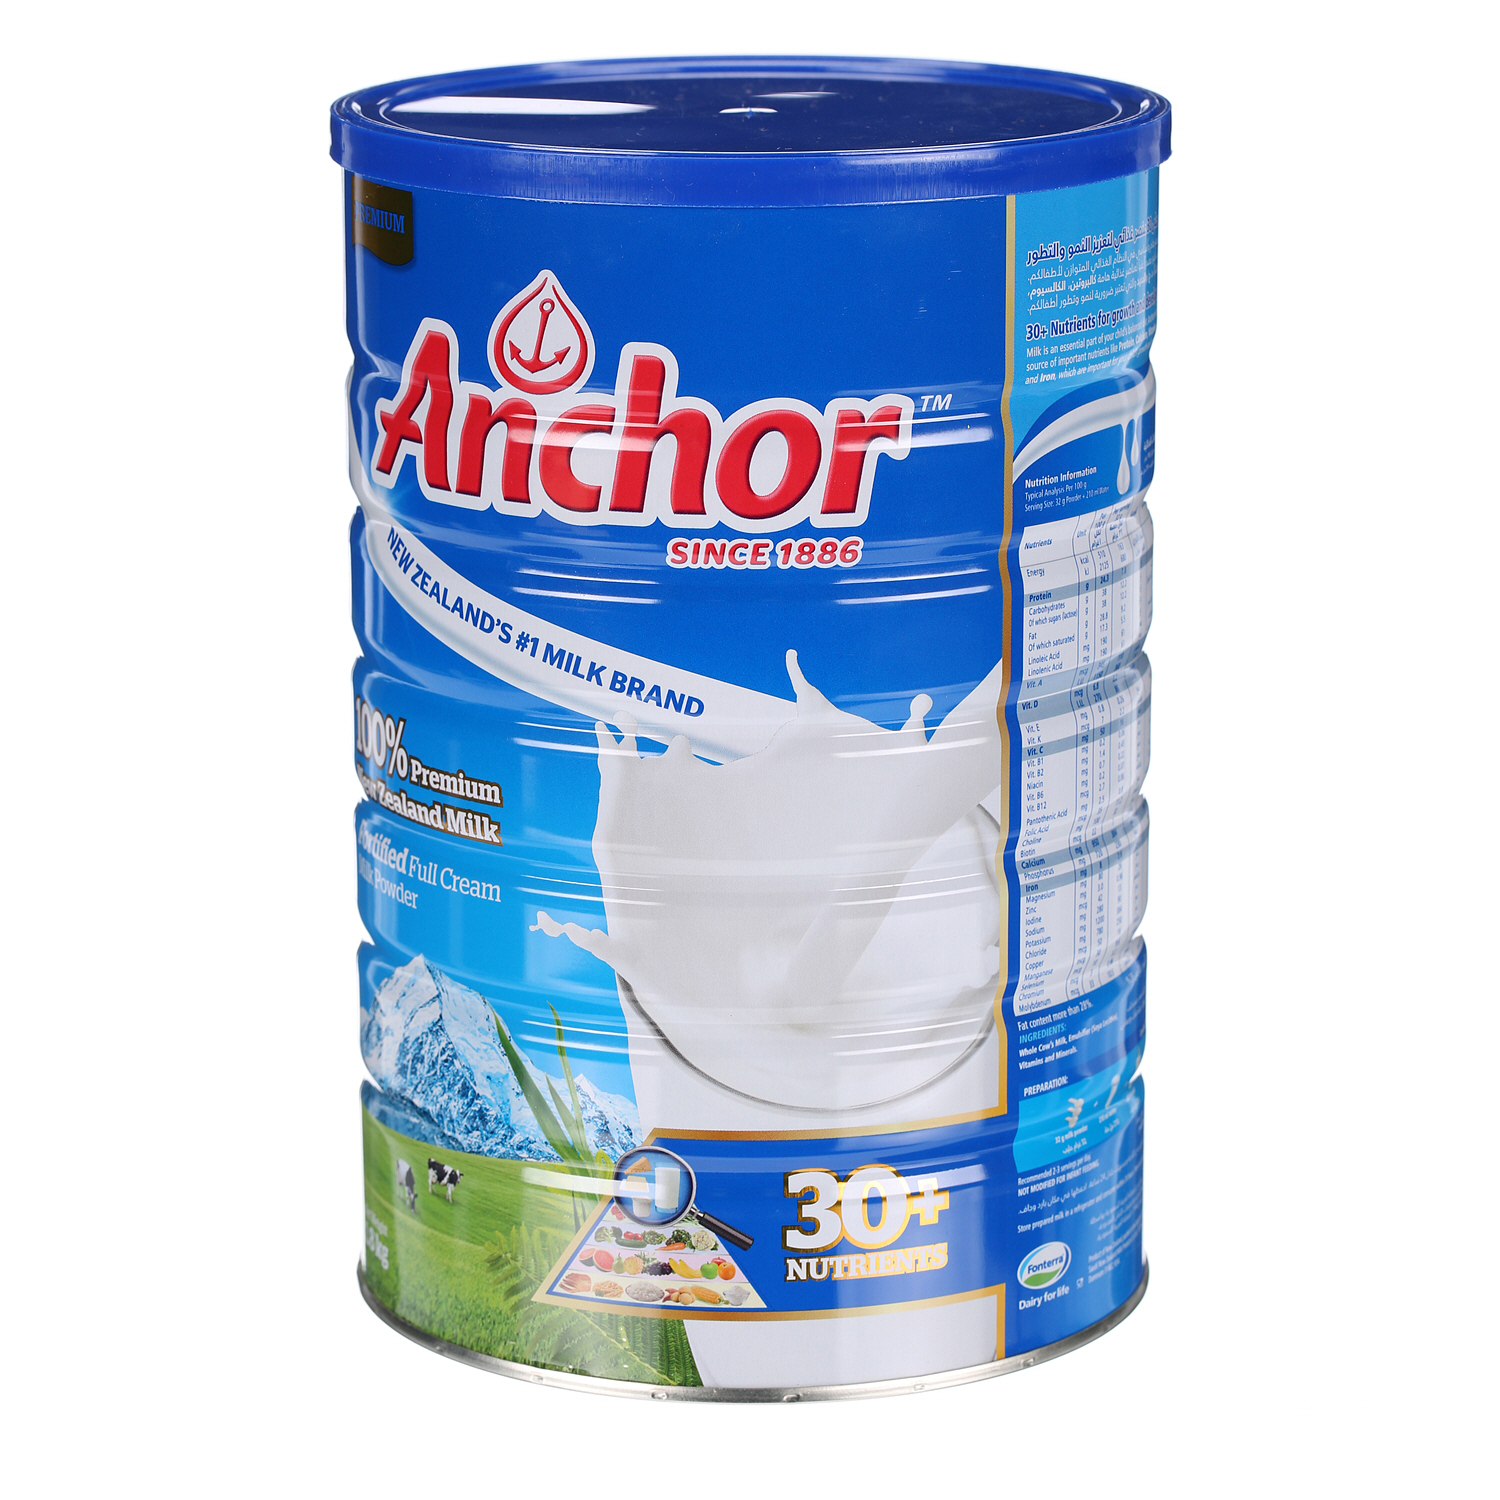 Anchor Milk Powder 1.8 Kg